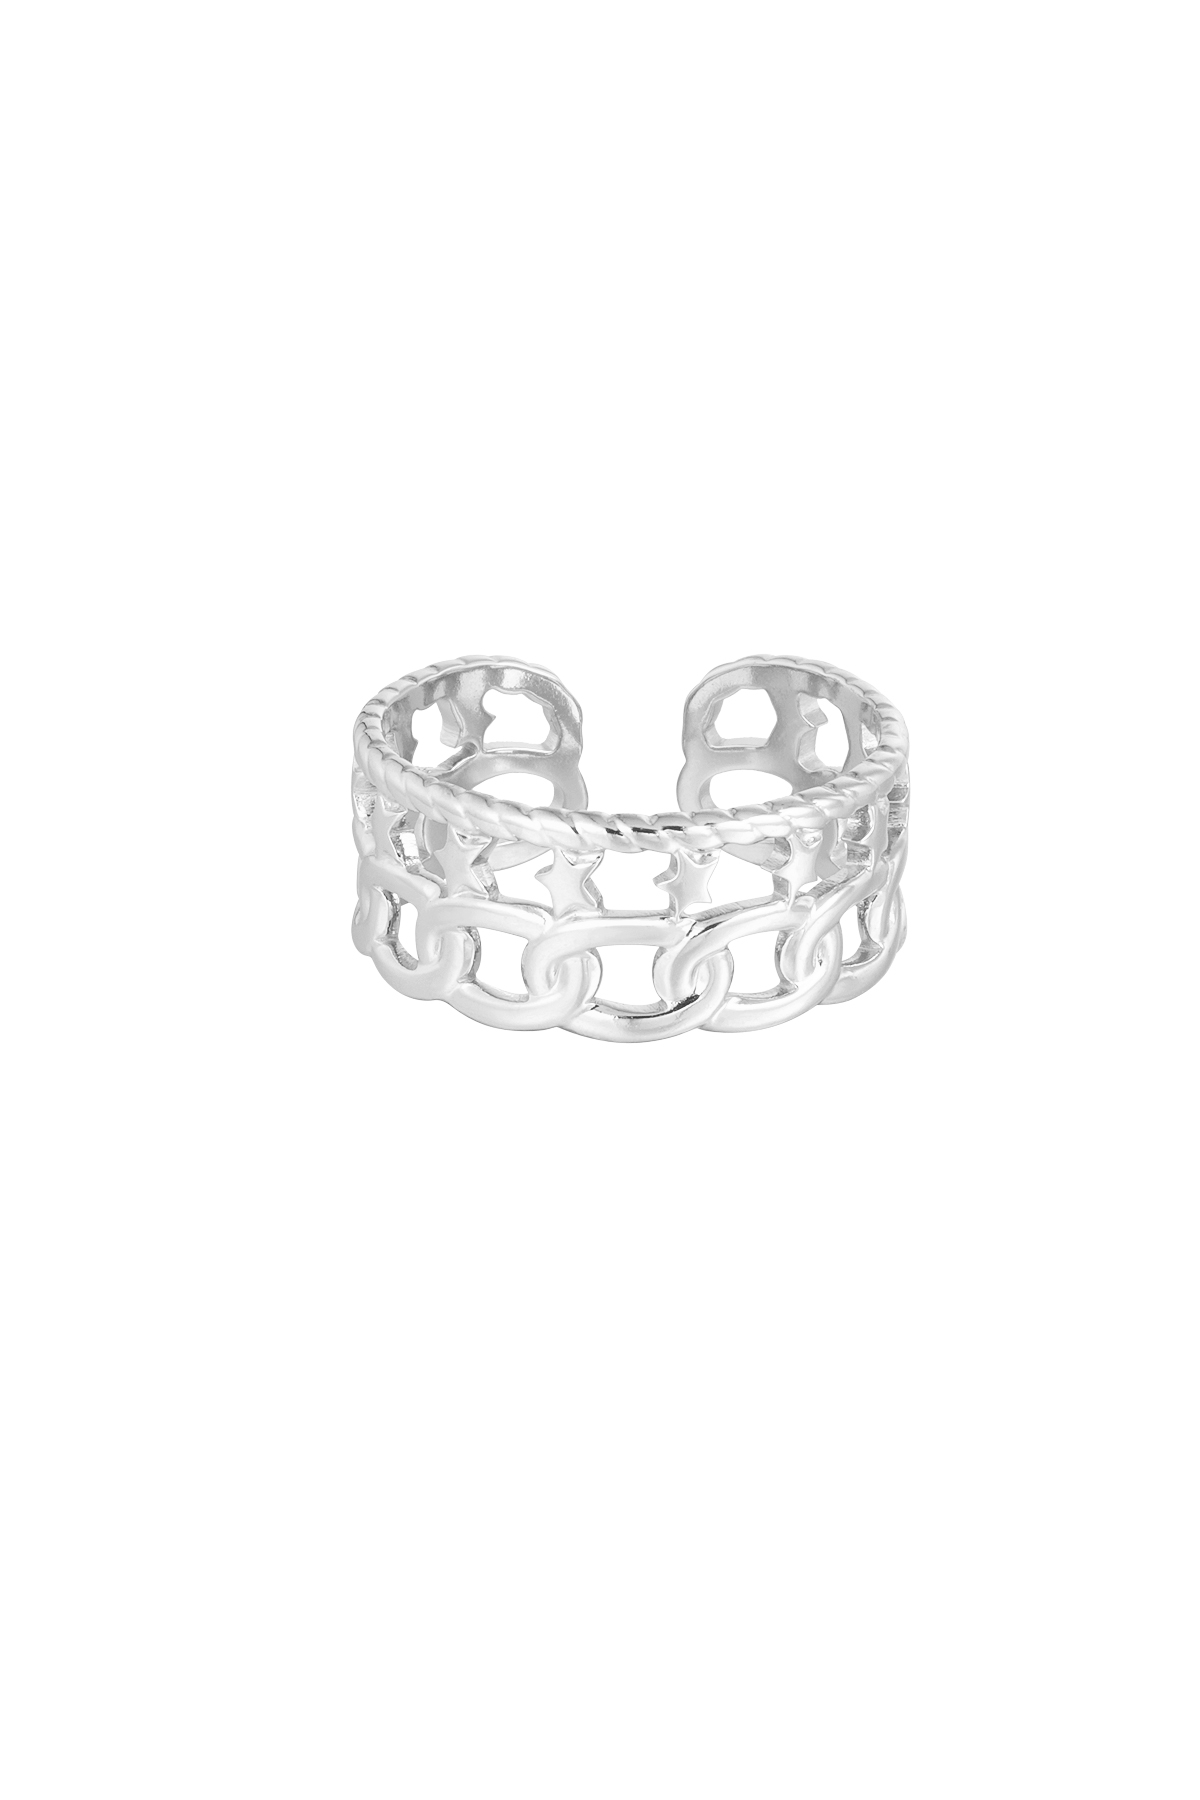 Maglie anello/stelle - argento h5 